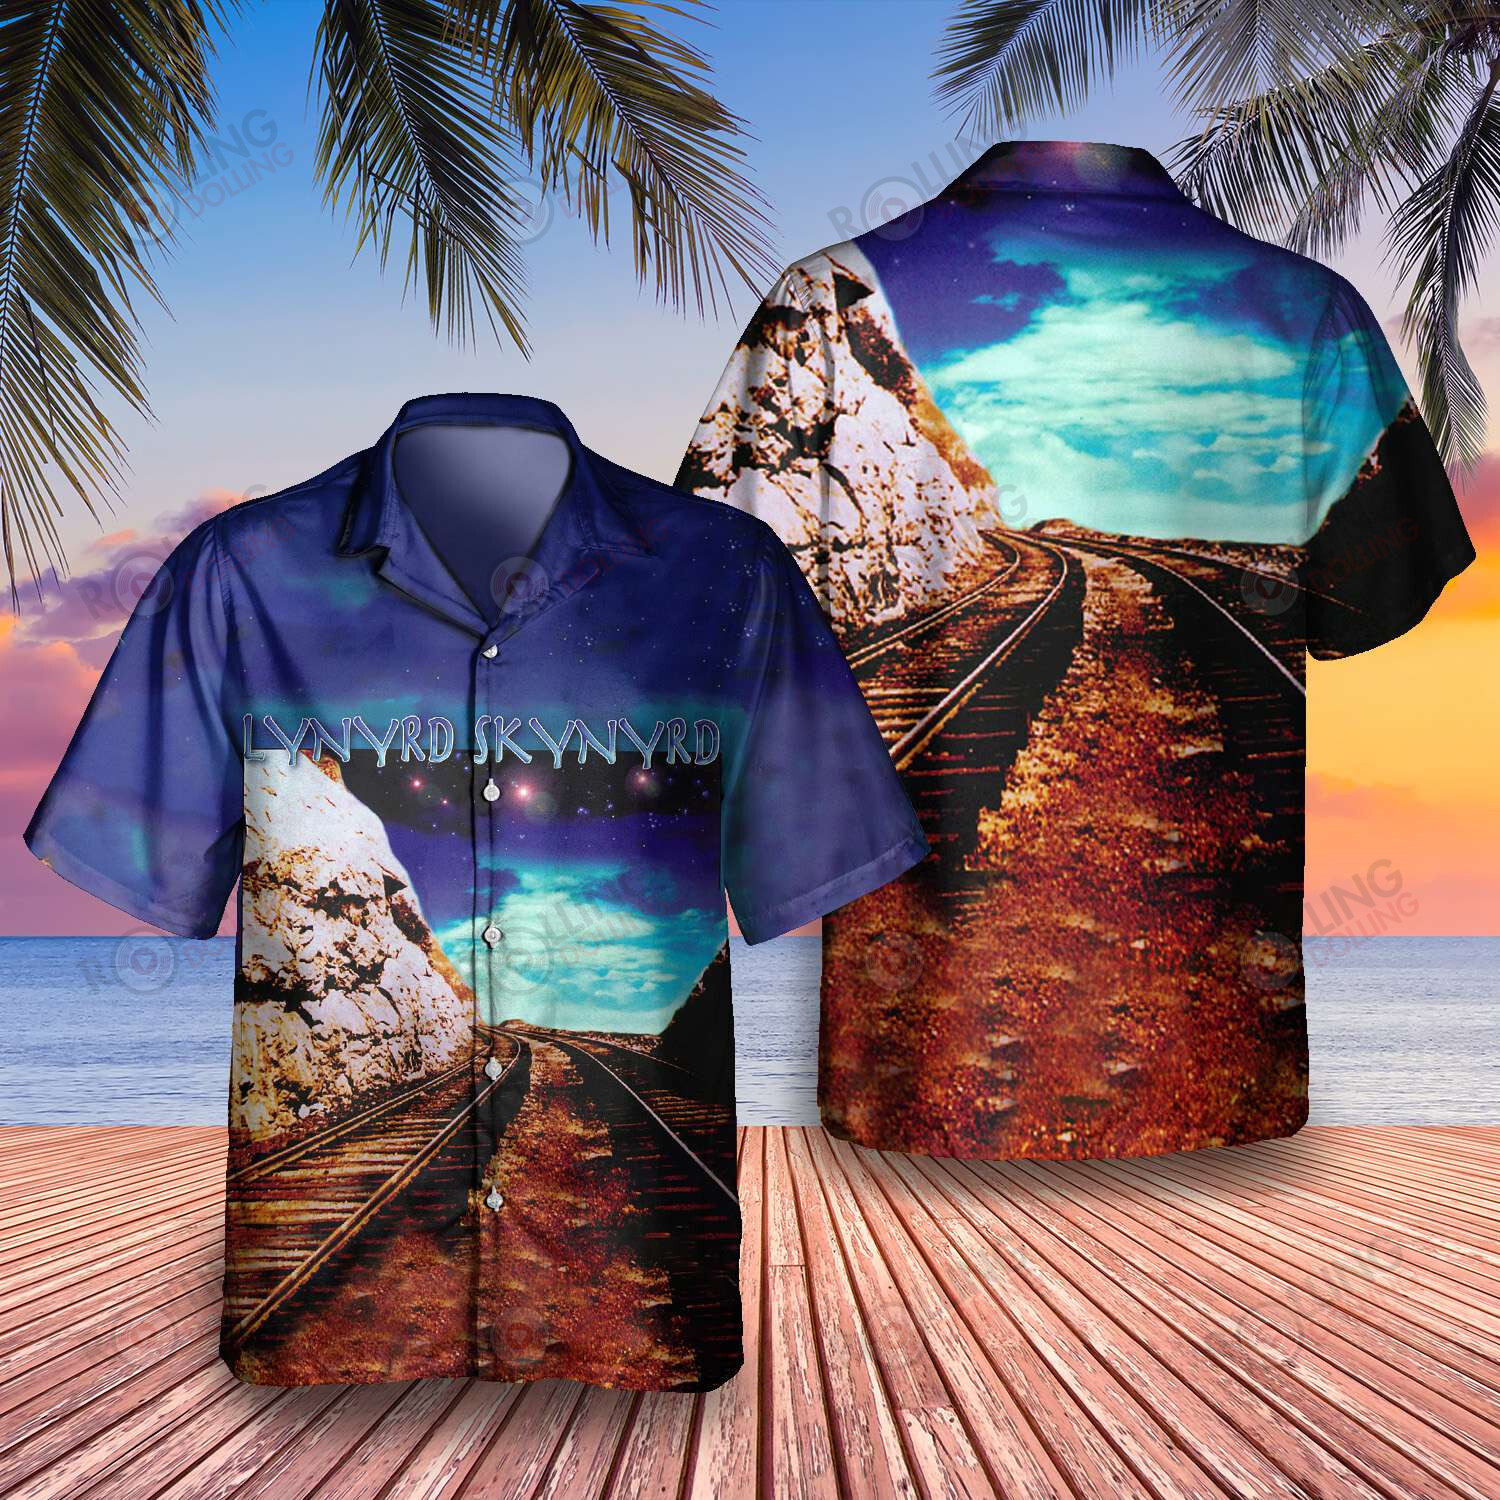 HOT Lynyrd Skynyrd Band Edge Of Forever Hawaii Shirt2